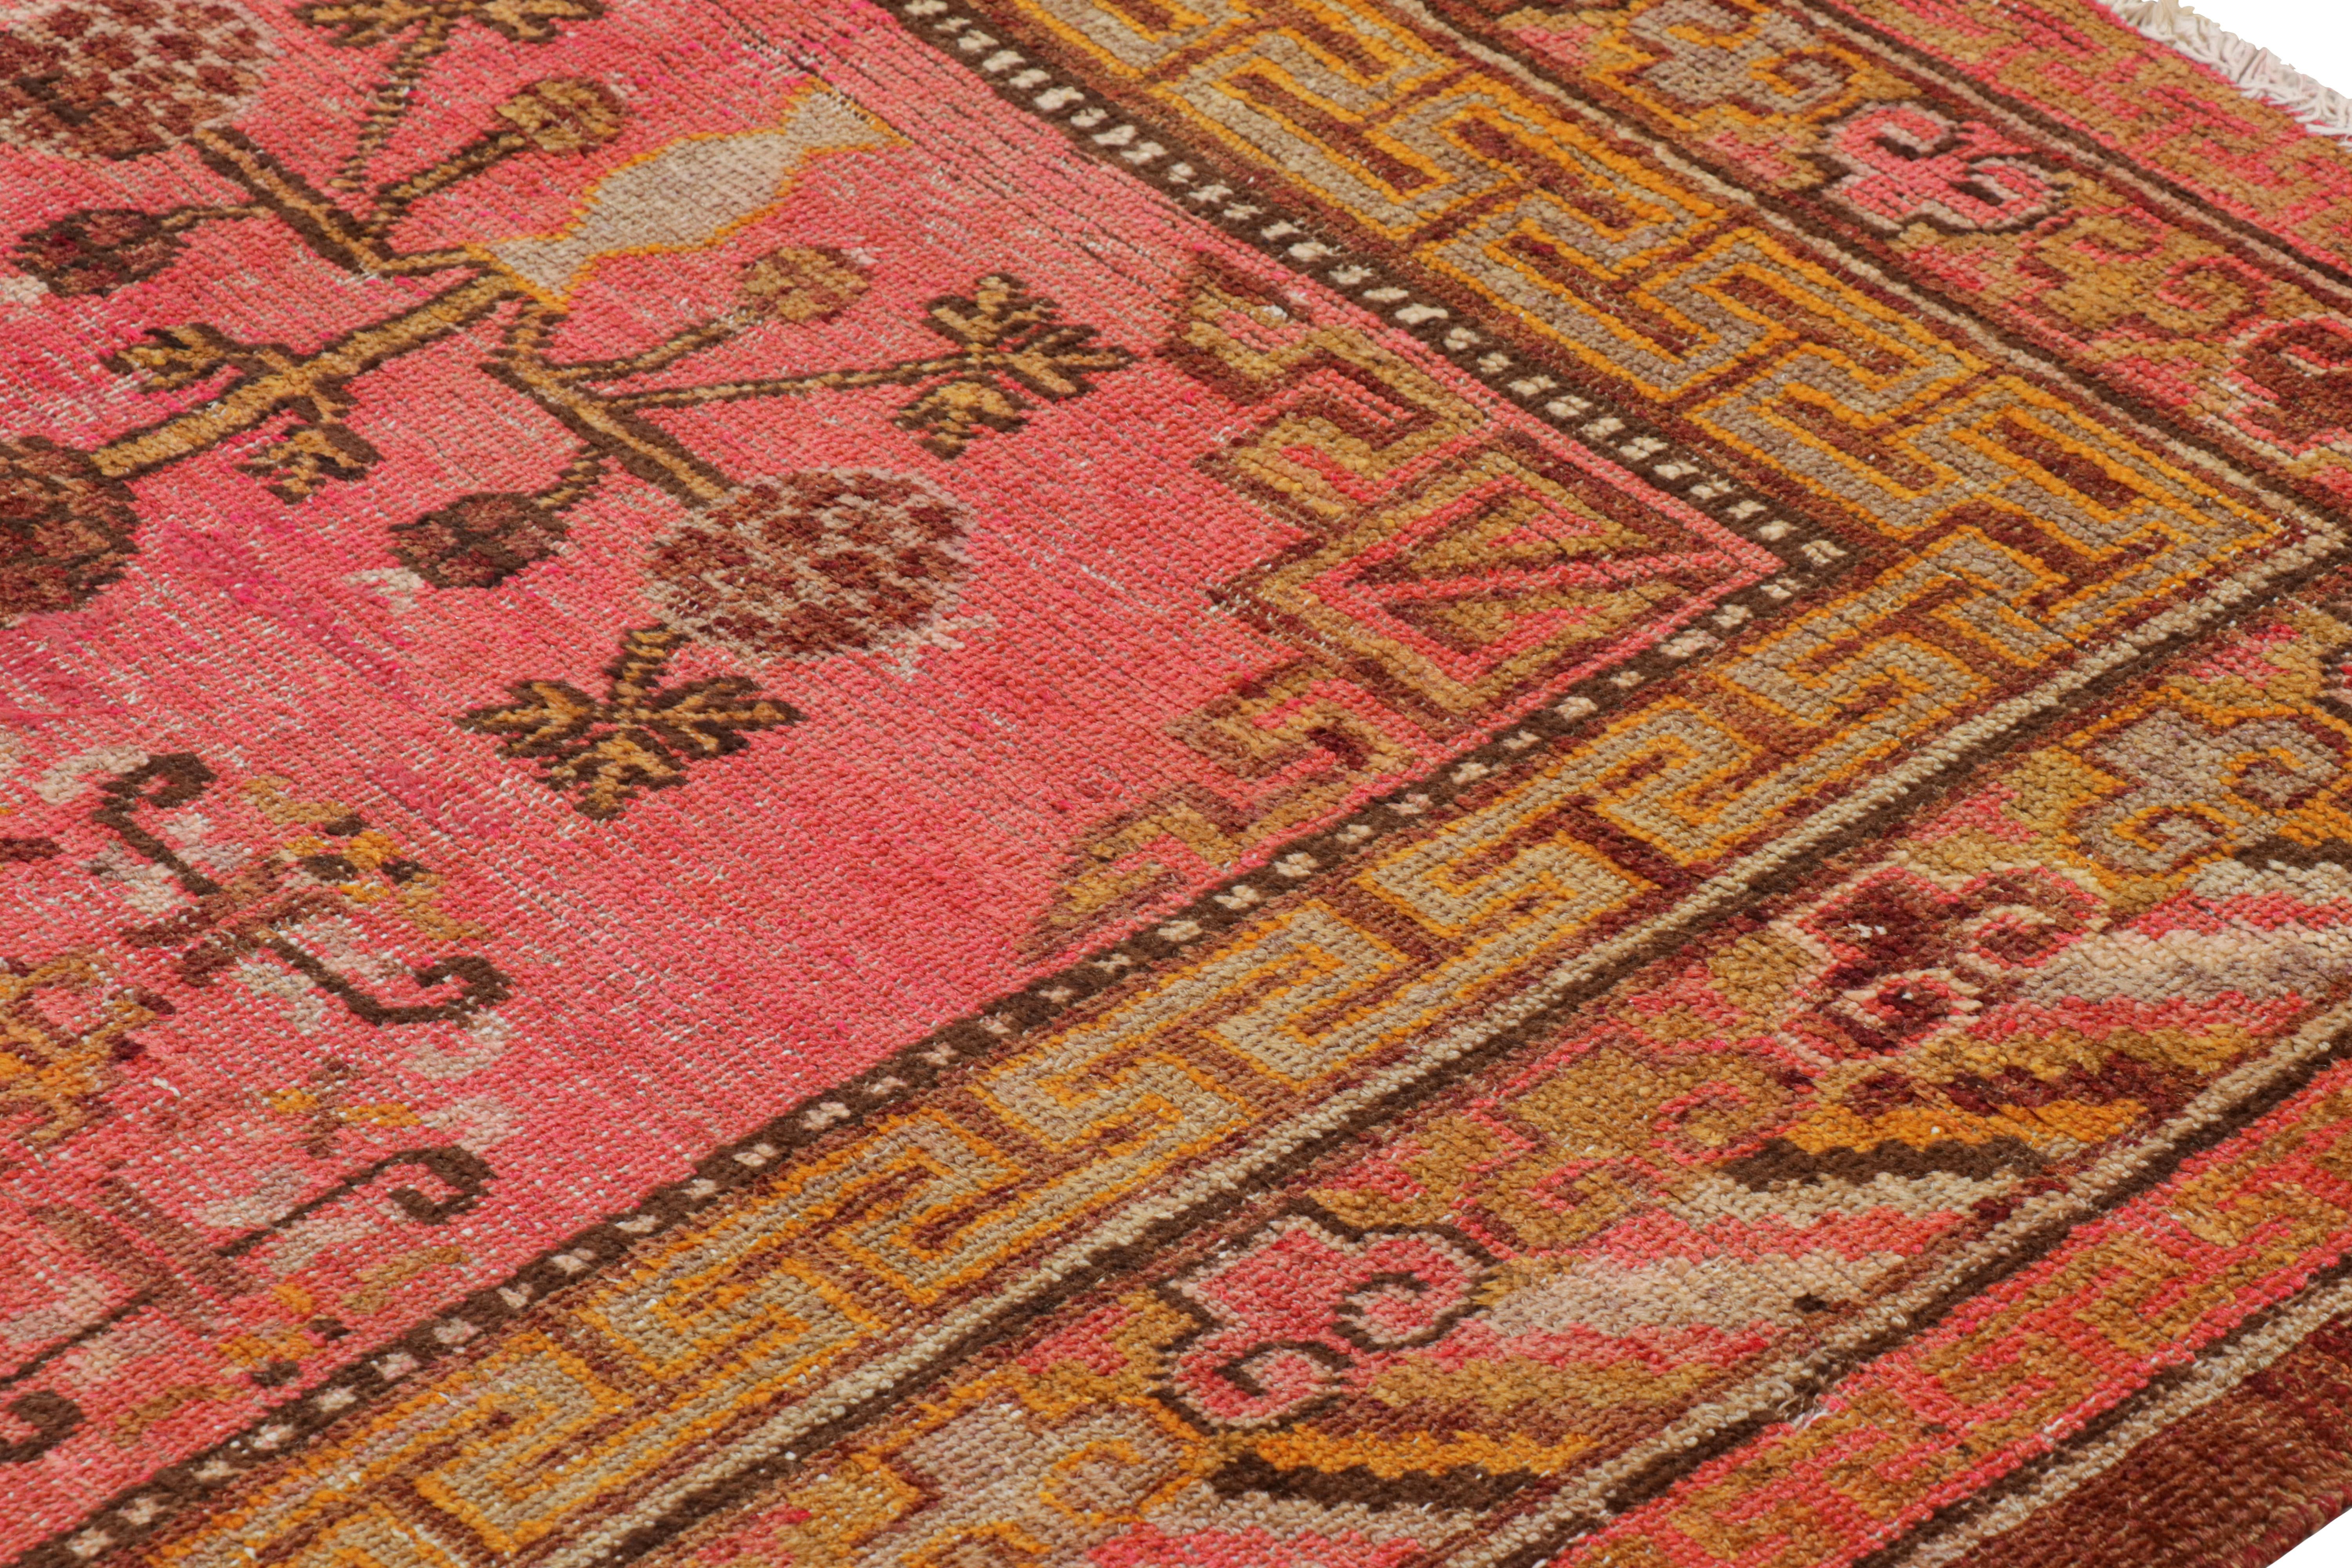 East Turkestani Semi Antique Khotan Transitional Pink and Golden-Brown Wool Rug by Rug & Kilim For Sale